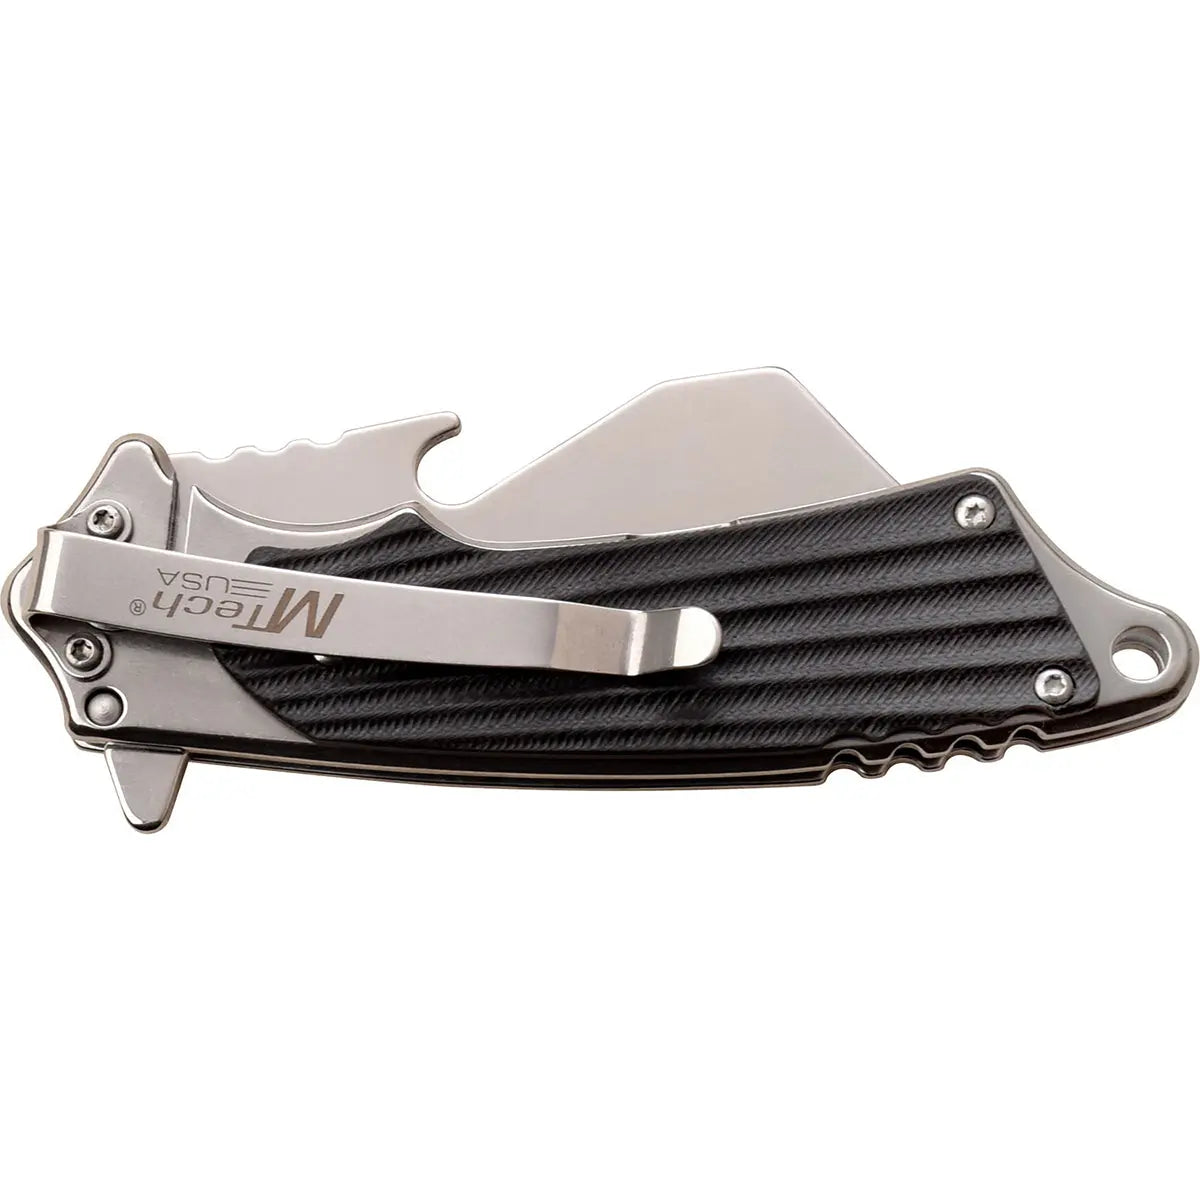 MTech USA Linerlock Spring Assisted Folding Knife, 3.25" Mirror Blade MT-A1186MR M-Tech